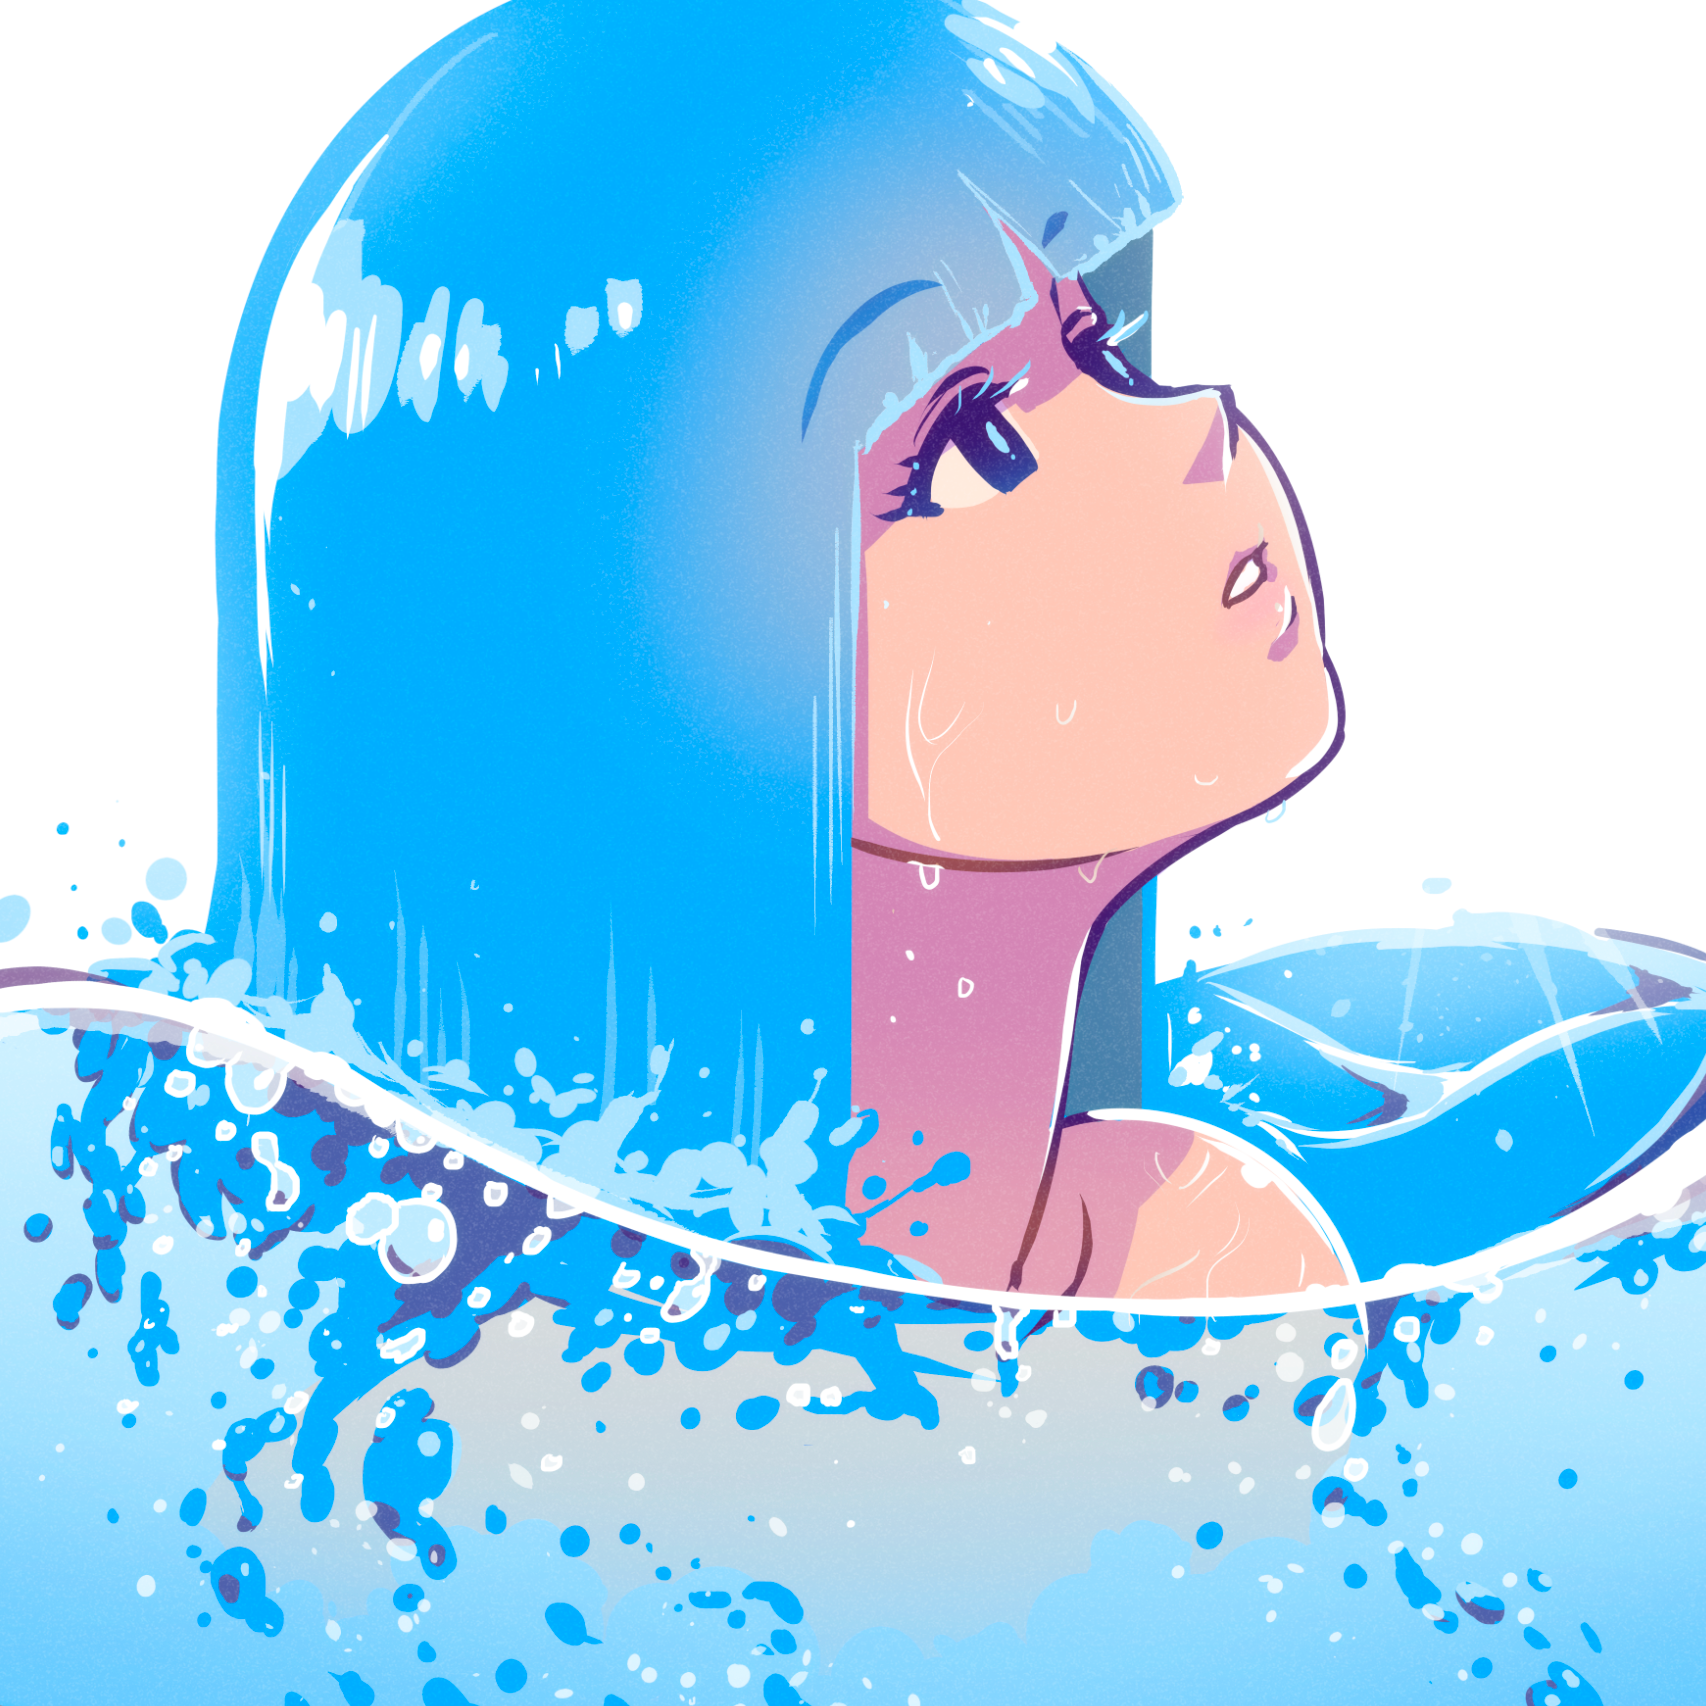 Digital Art Water Fictional Character In Water Looking Away Looking Up 1706x1706